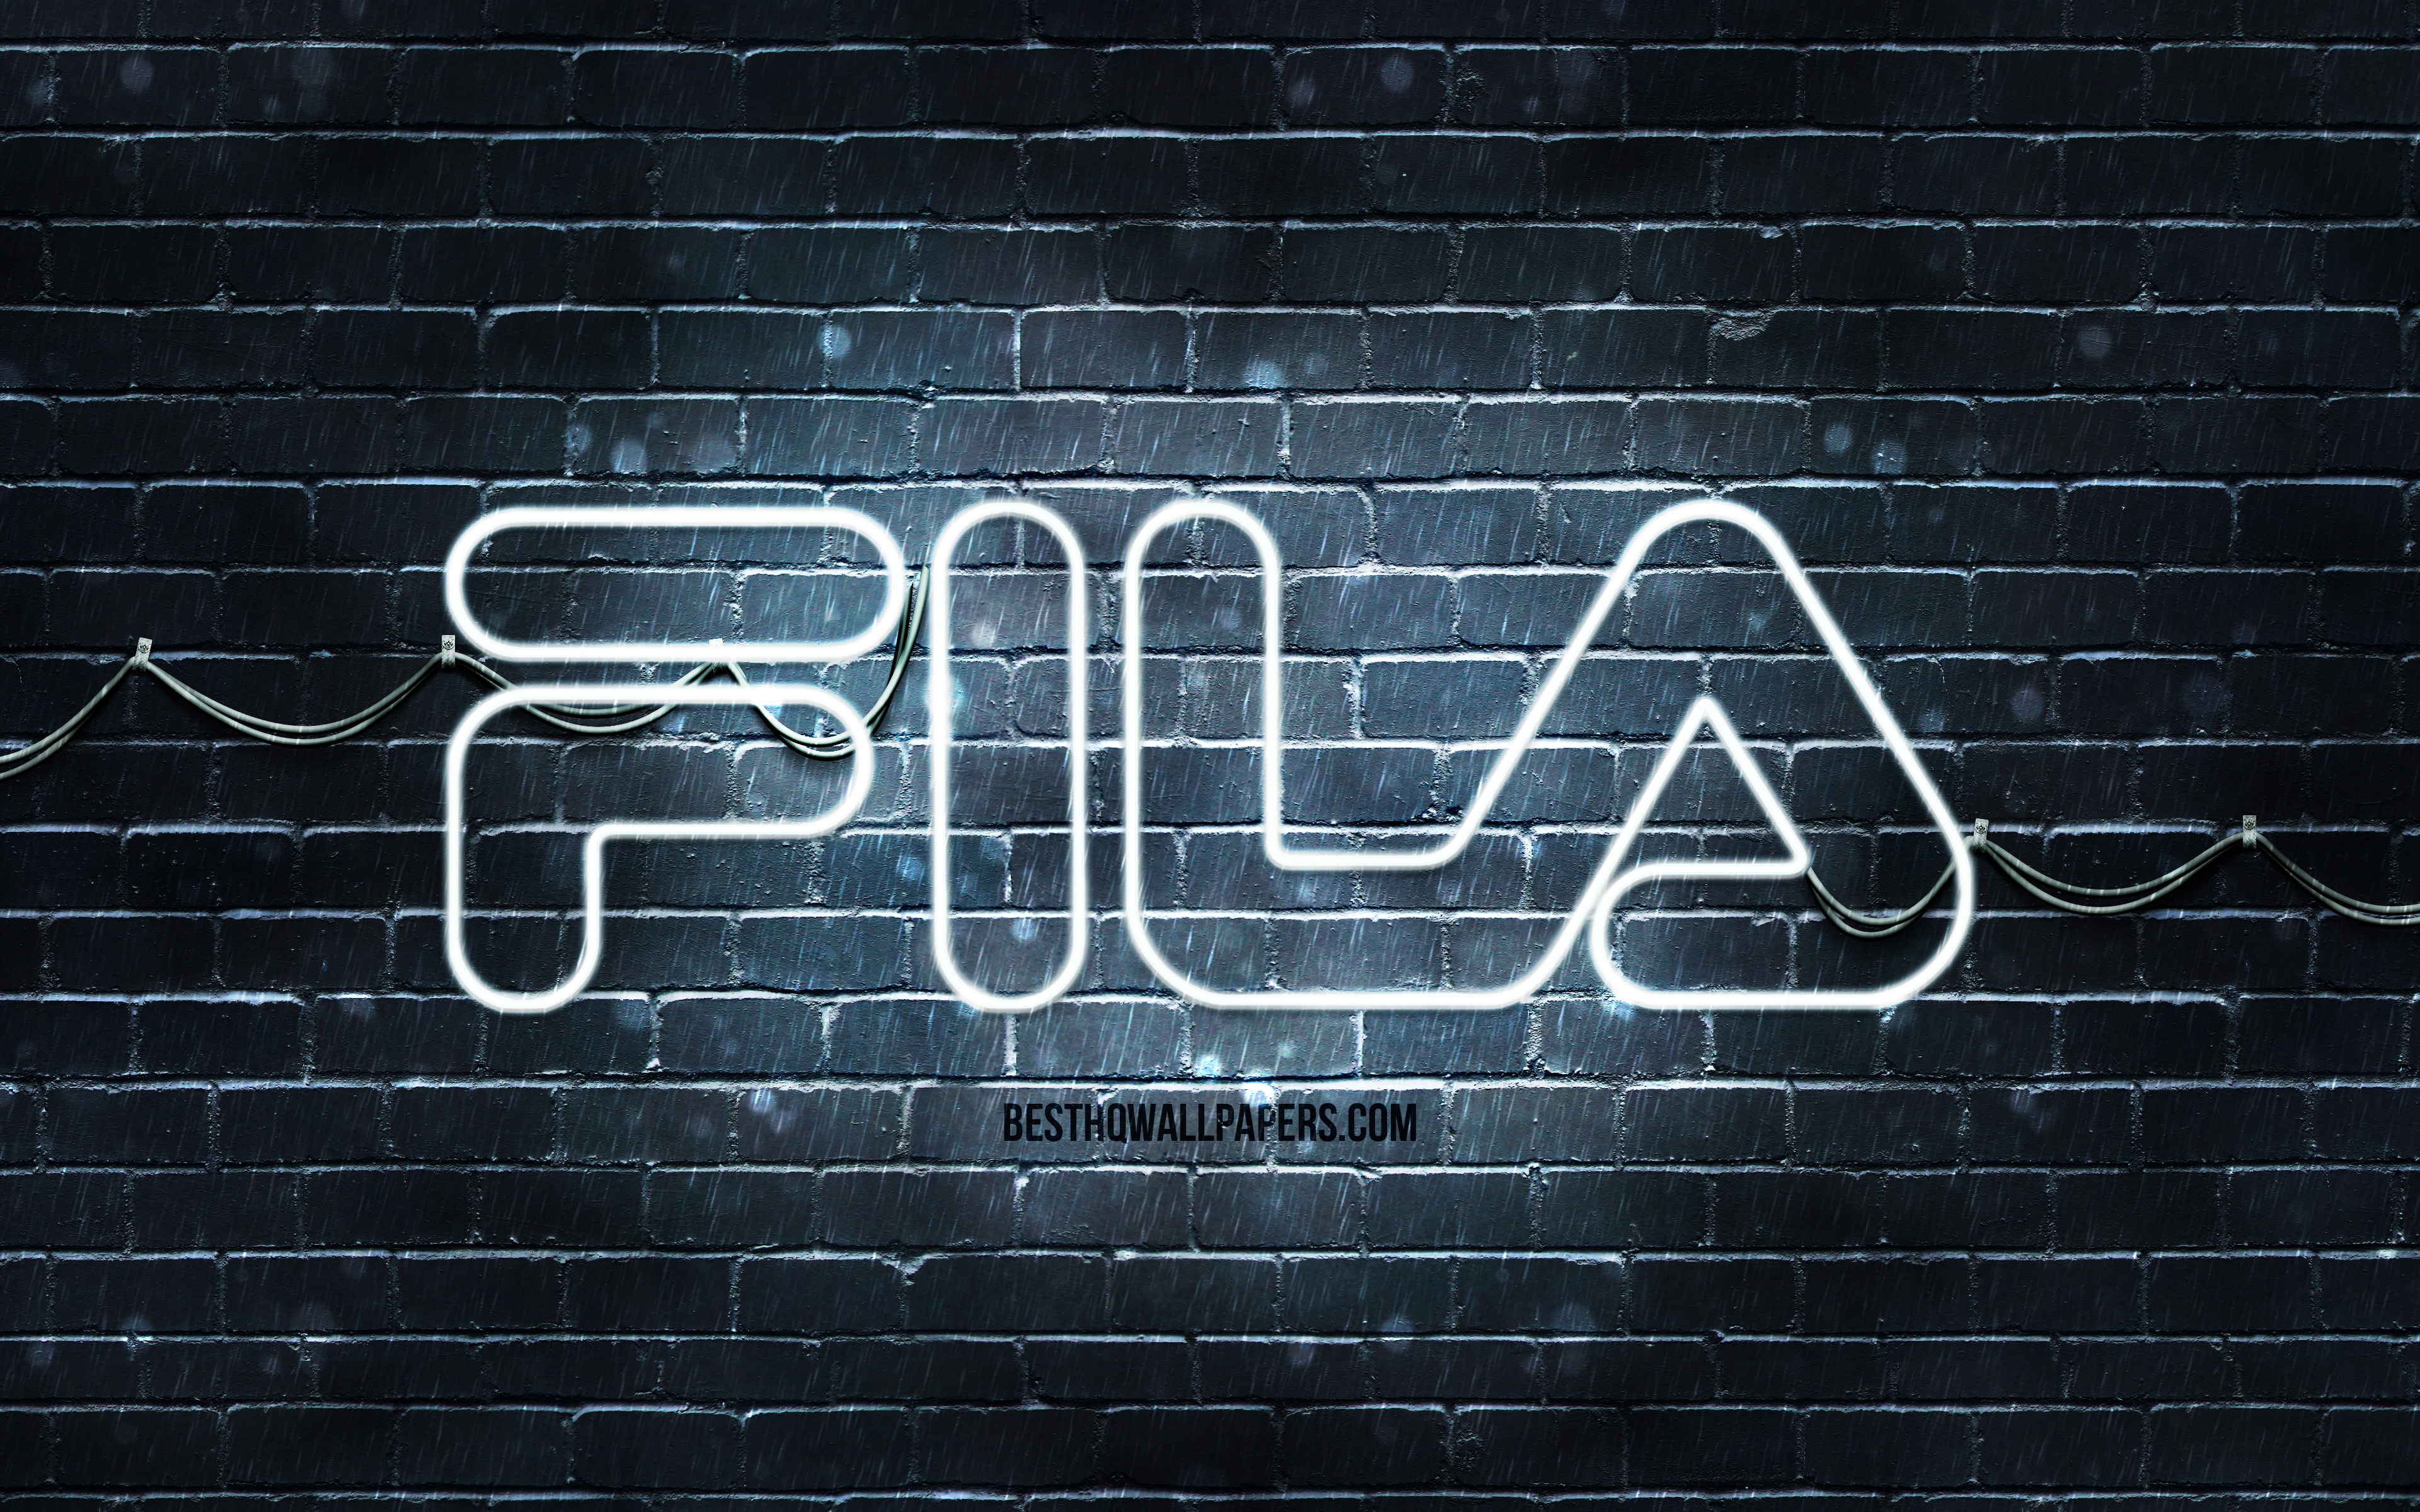 Download wallpaper Fila white logo, 4k, white brickwall, Fila logo, brands, Fila neon logo, Fila for desktop with resolution 3840x2400. High Quality HD picture wallpaper